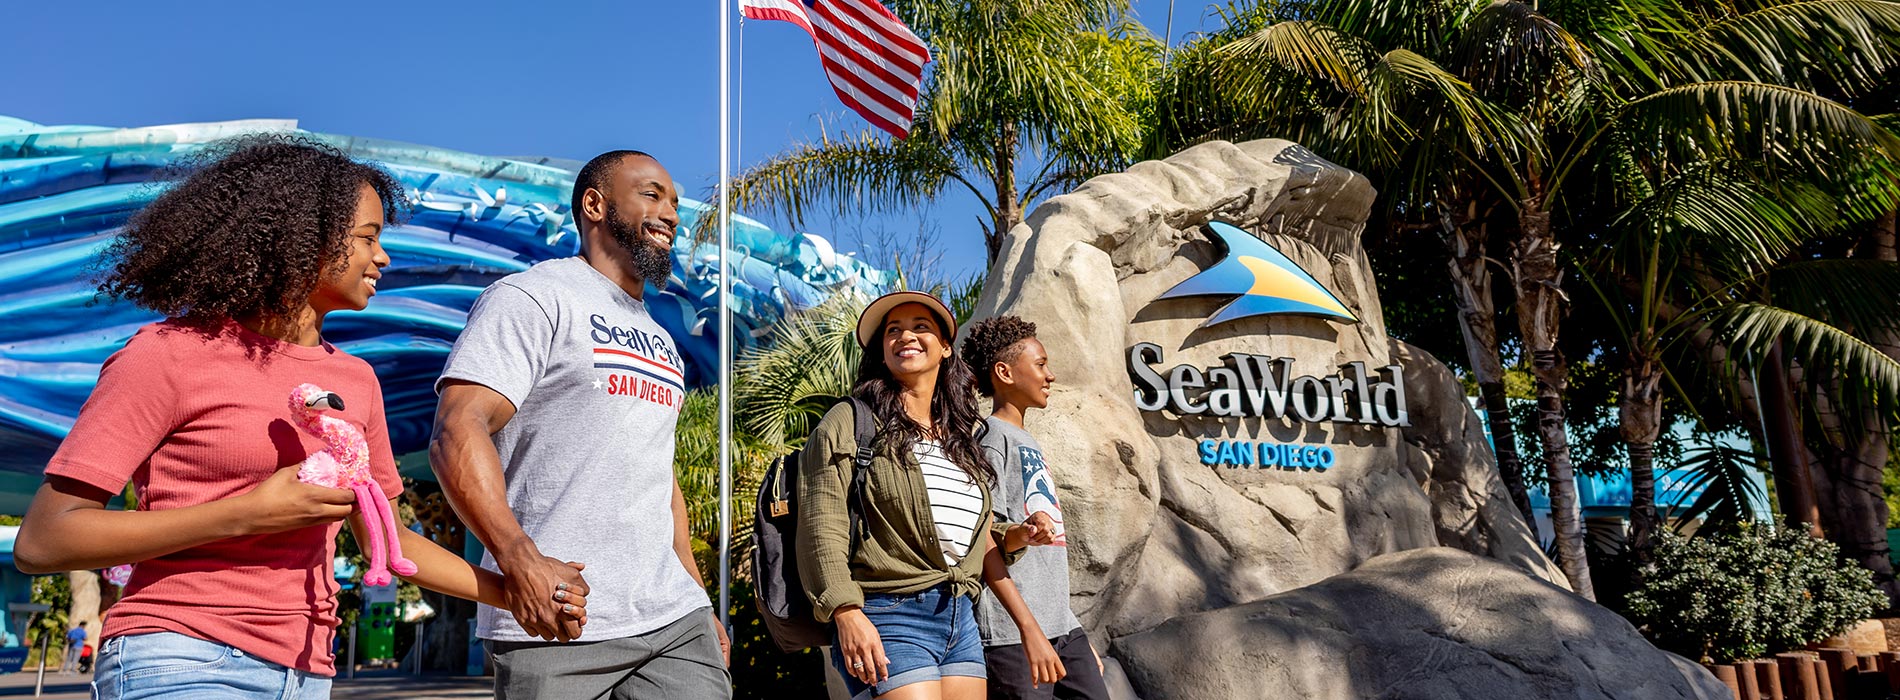 Family visiting SeaWorld San Diego